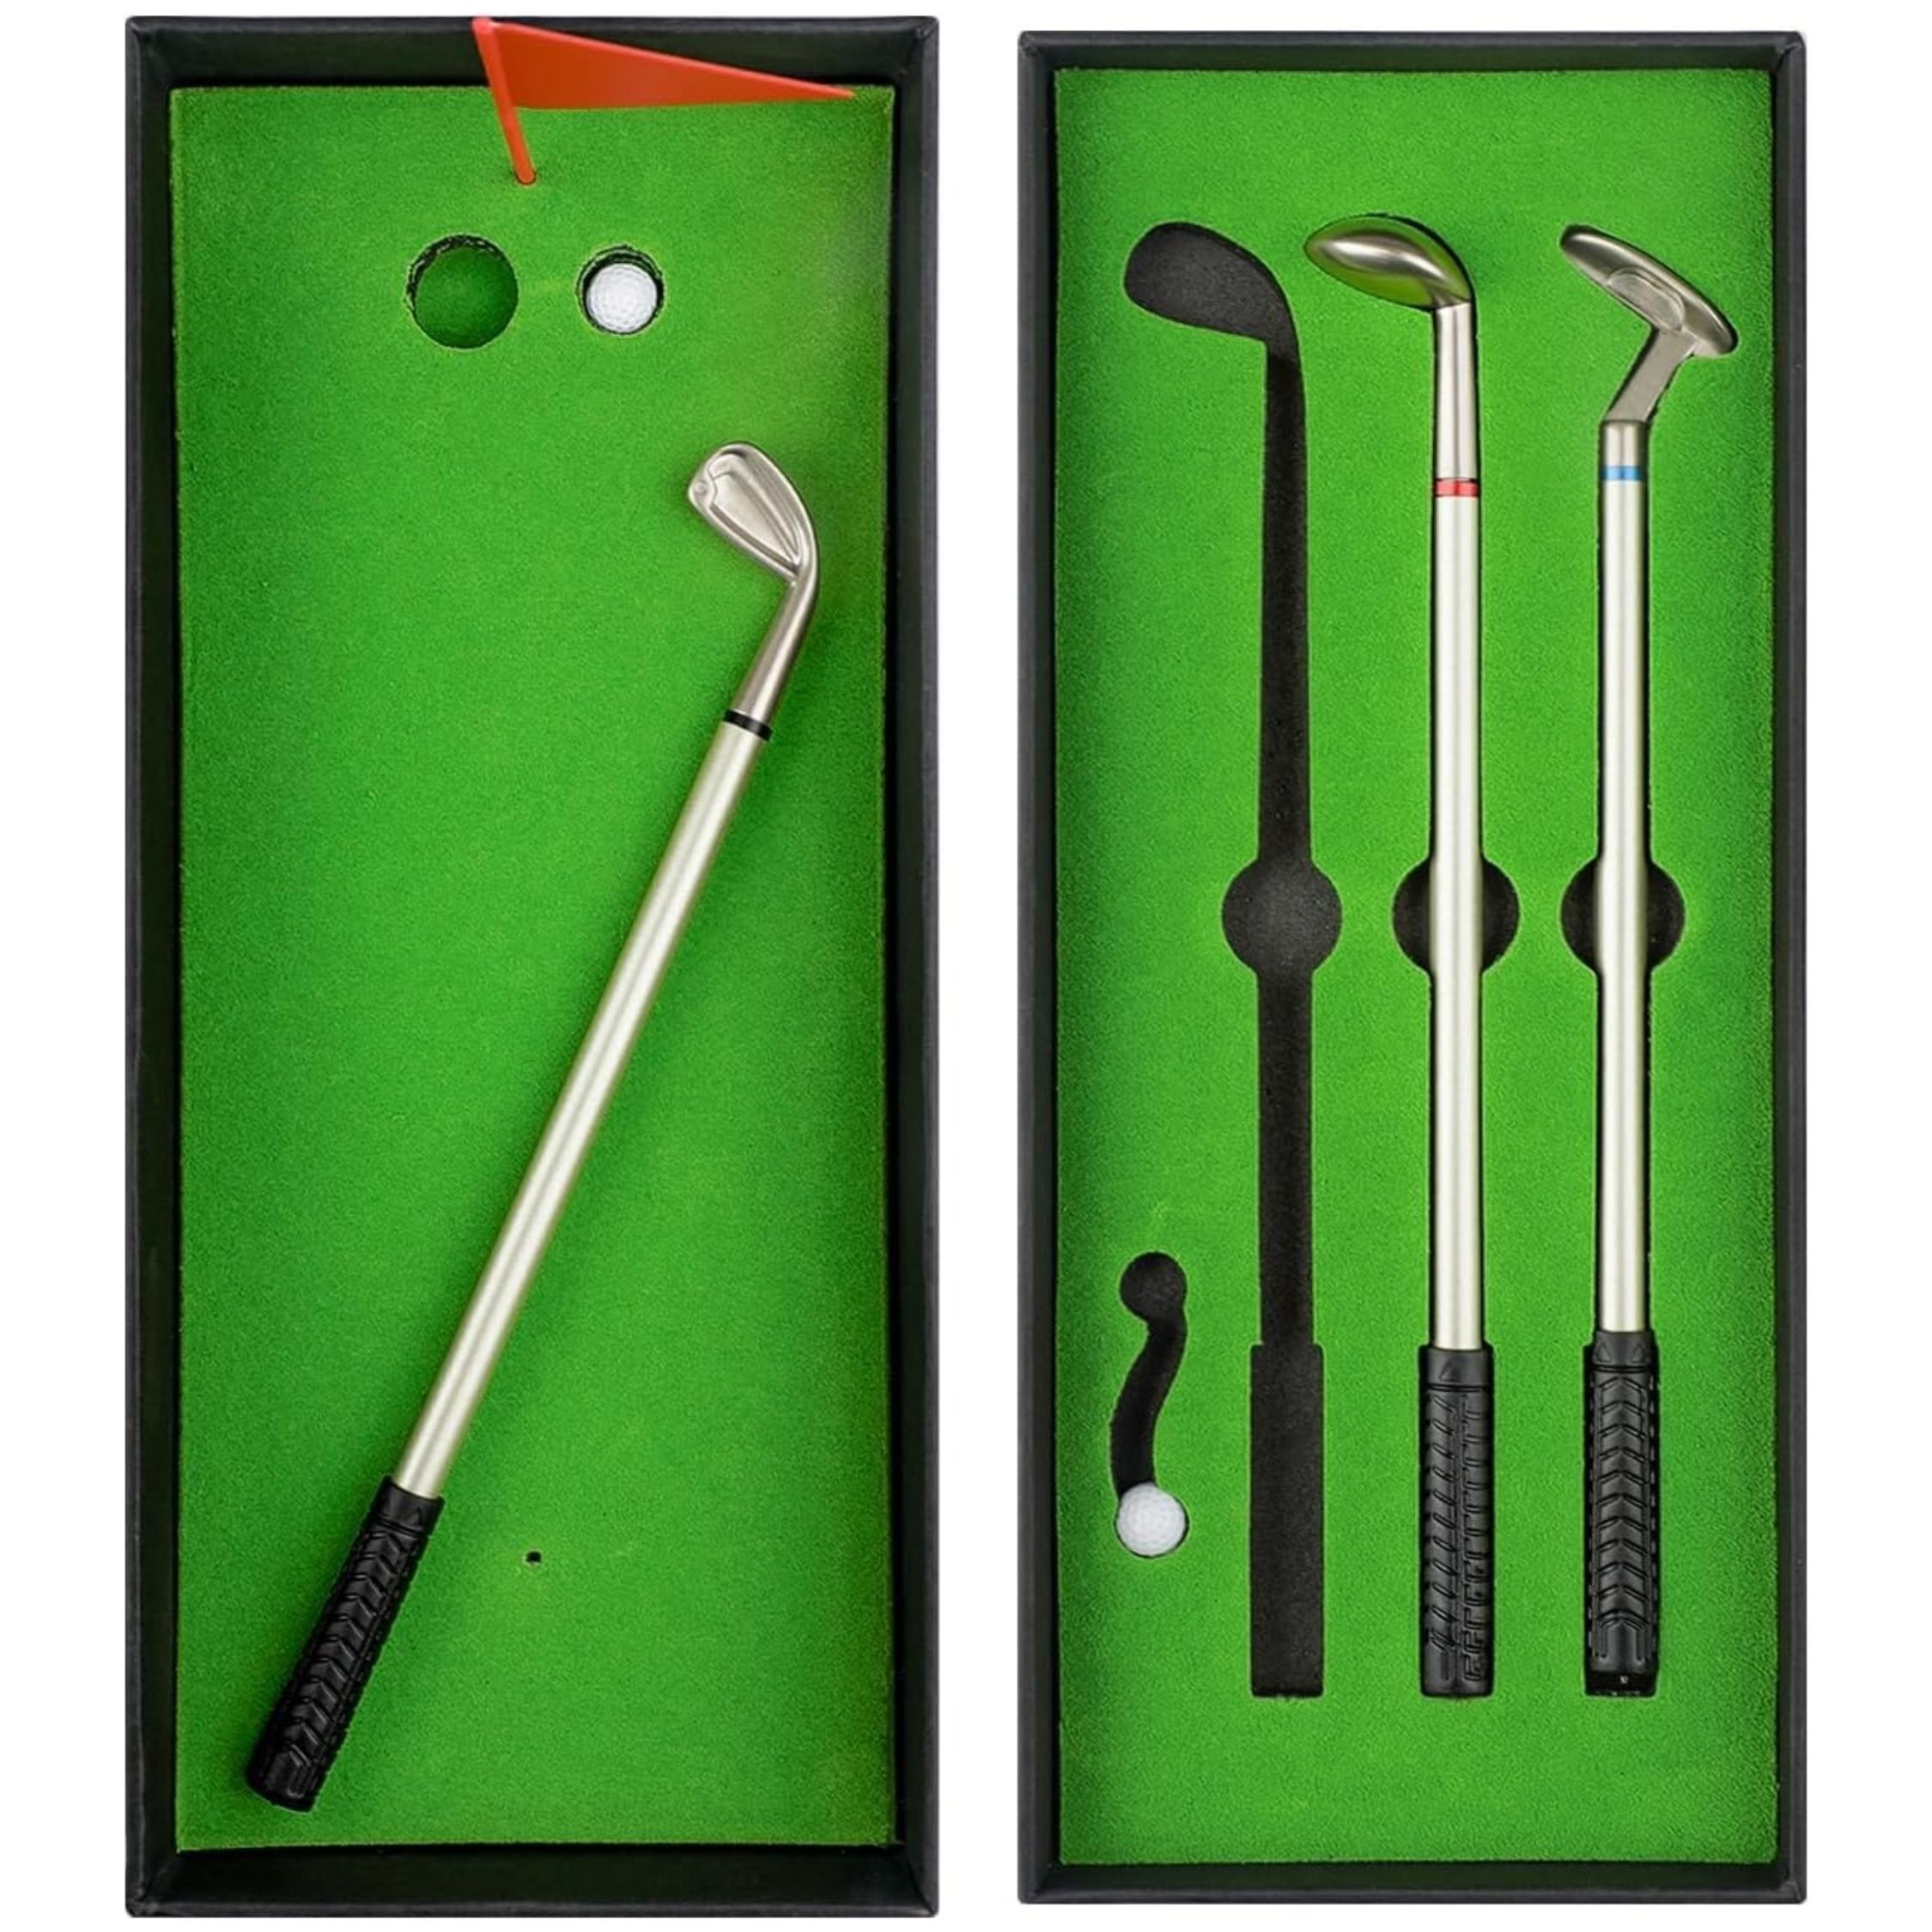 Golf Pen Holder Gifts for Men Women, Unique Birthday for Dad Boyfriend Boss Coworkers Golfers, Cool Office Gadgets Desk Decor, Mini Golf Pen Cup